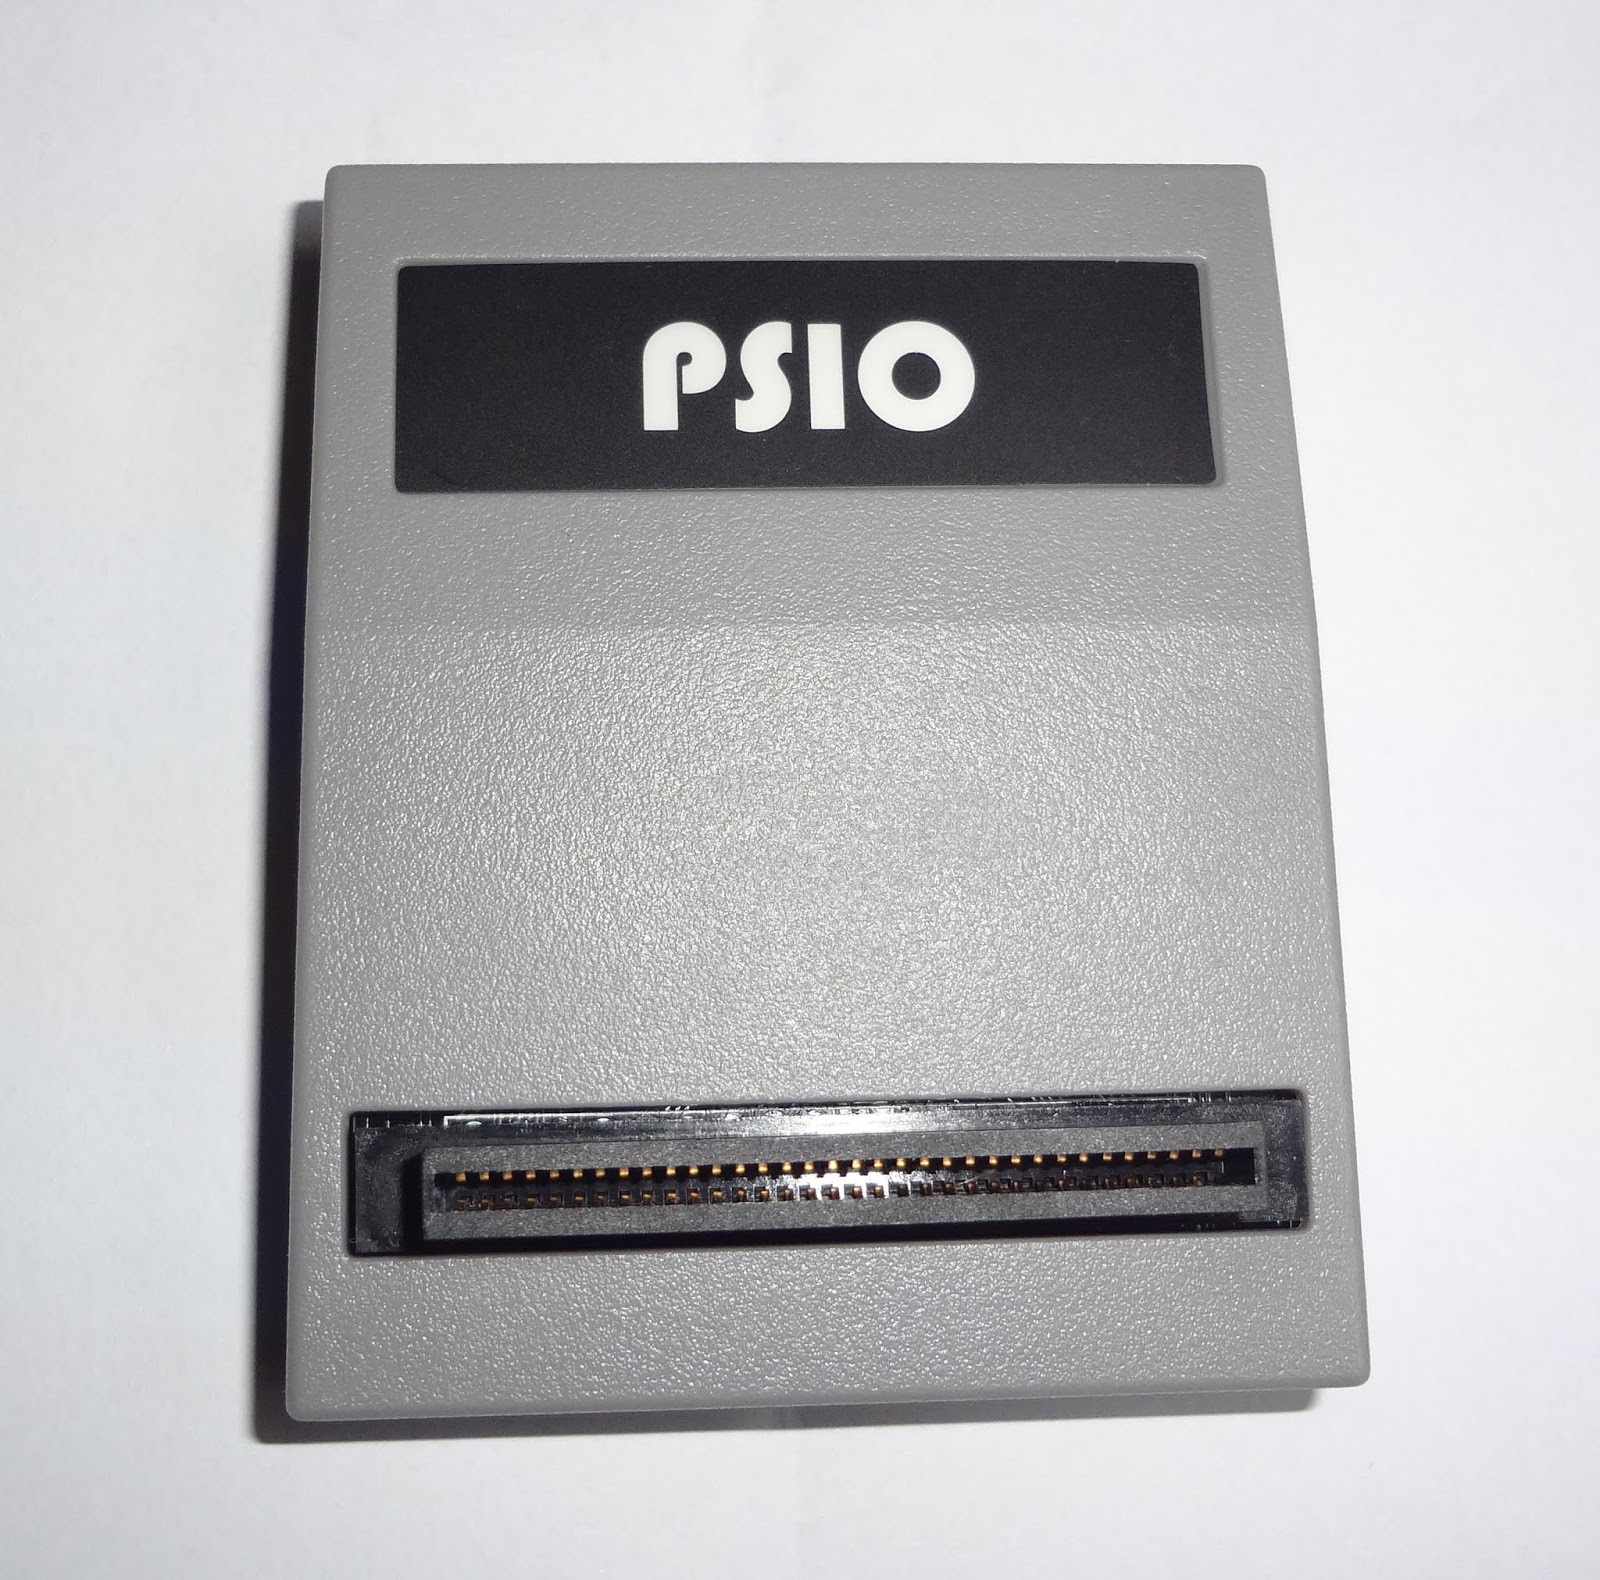 Psio_ps1_psx_flashcard_playstation_06.JPG